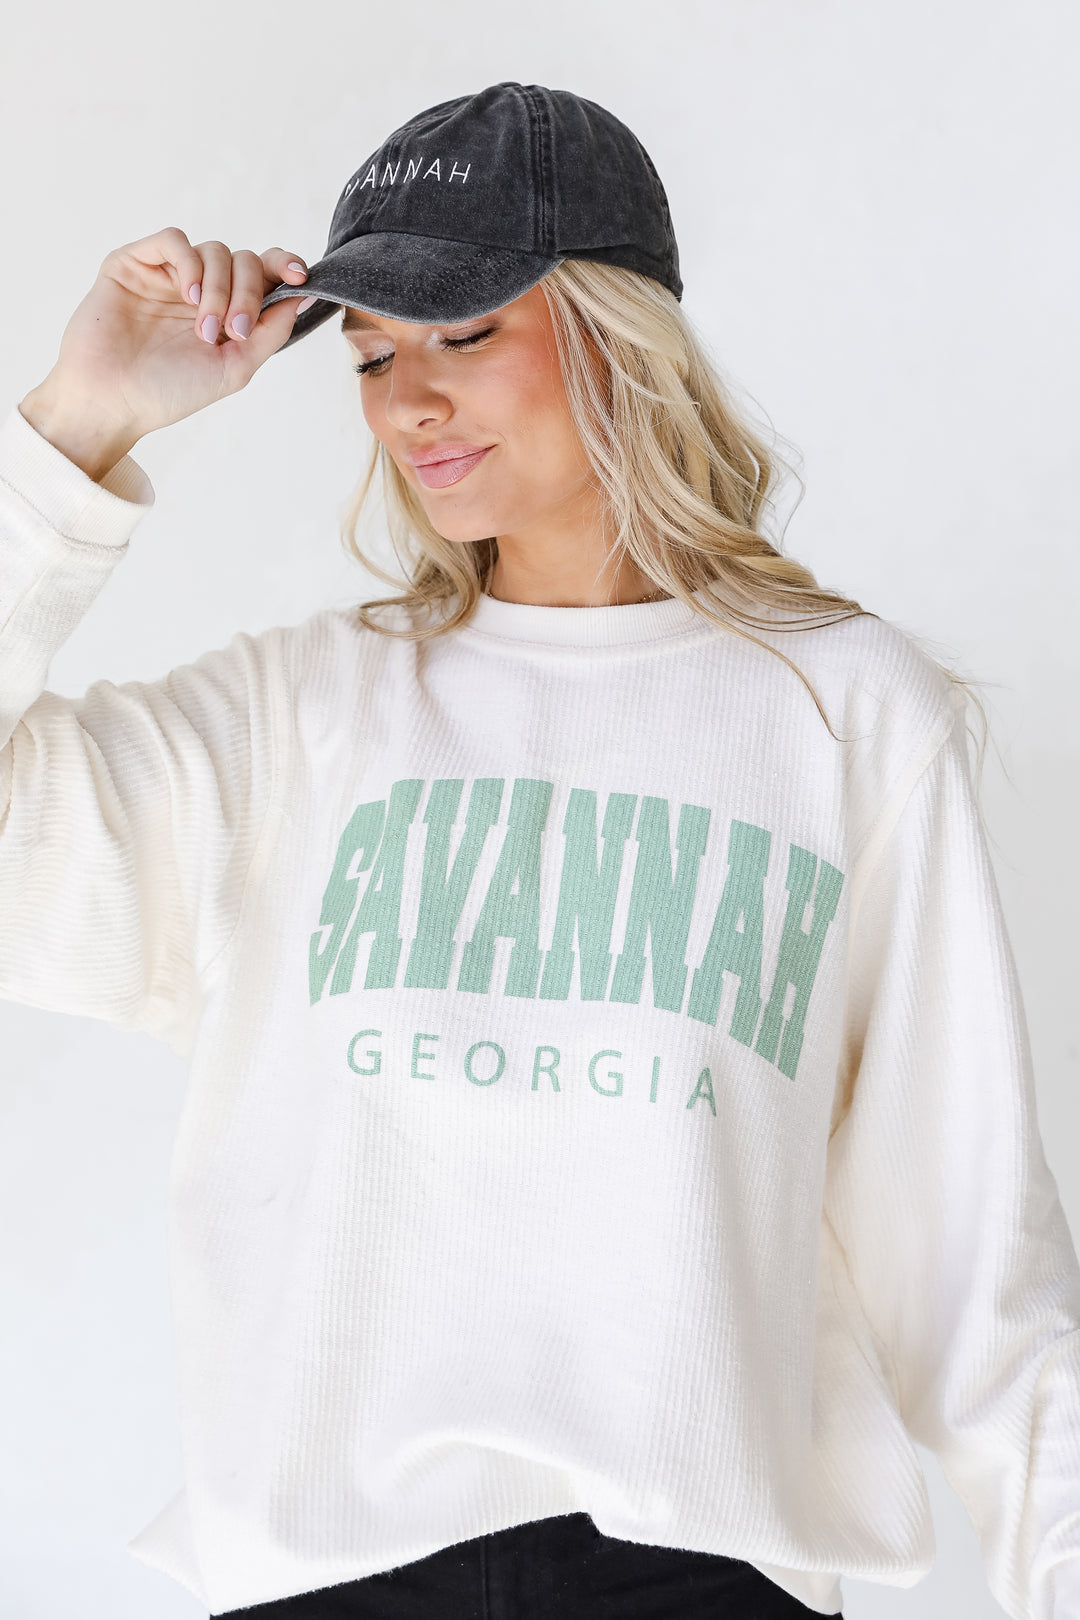 Savannah Corded Pullover. Graphic Sweatshirt. Savannah Sweatshirt. Oversized, comfy